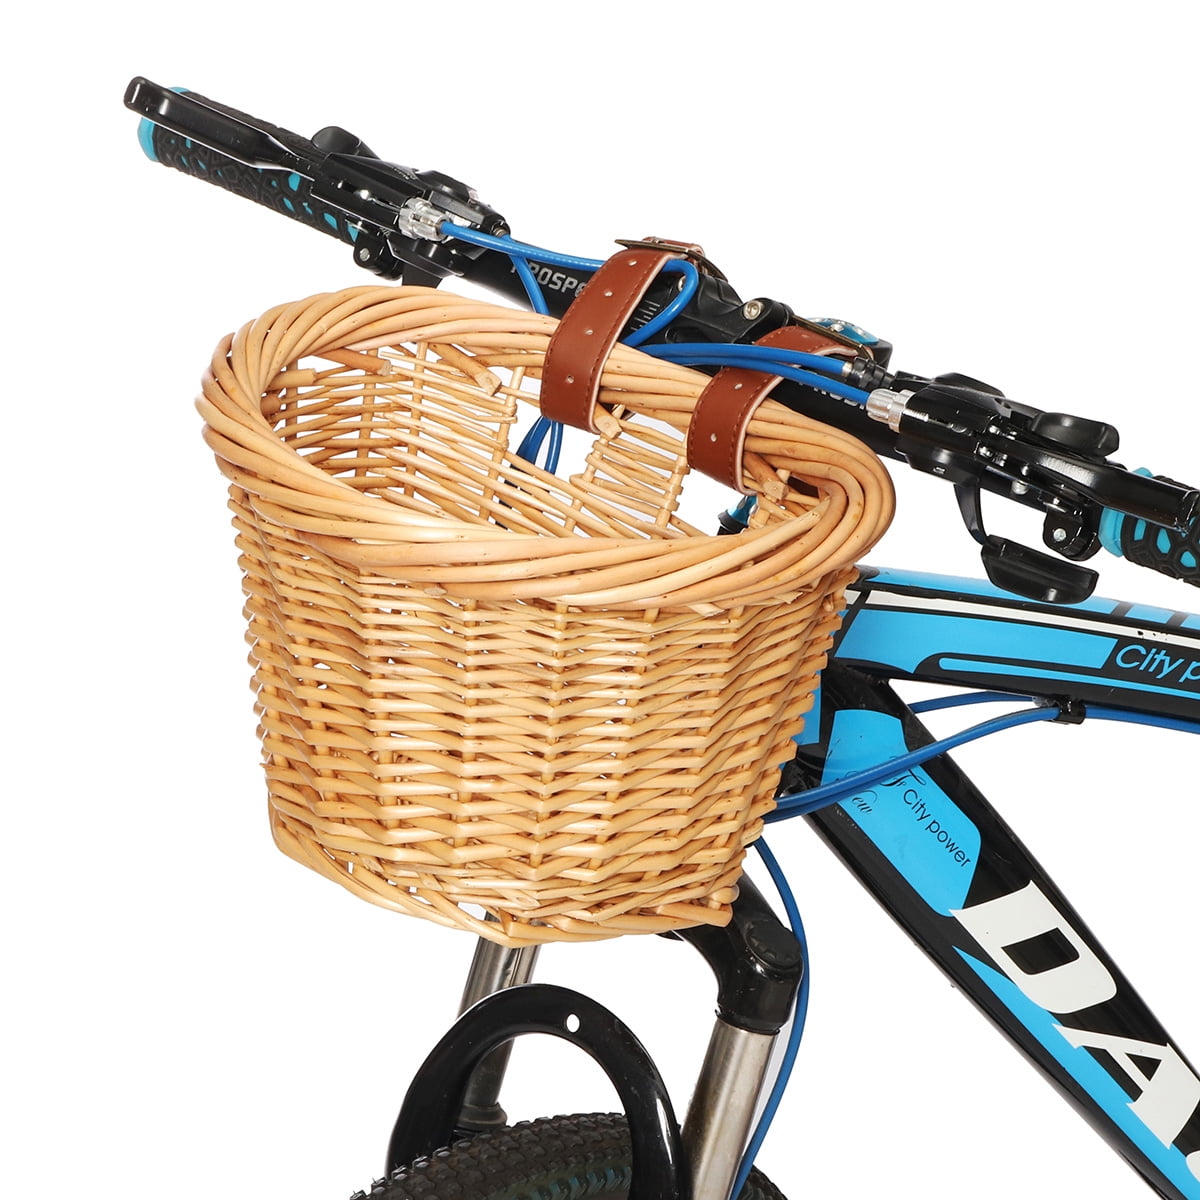 cat bike basket